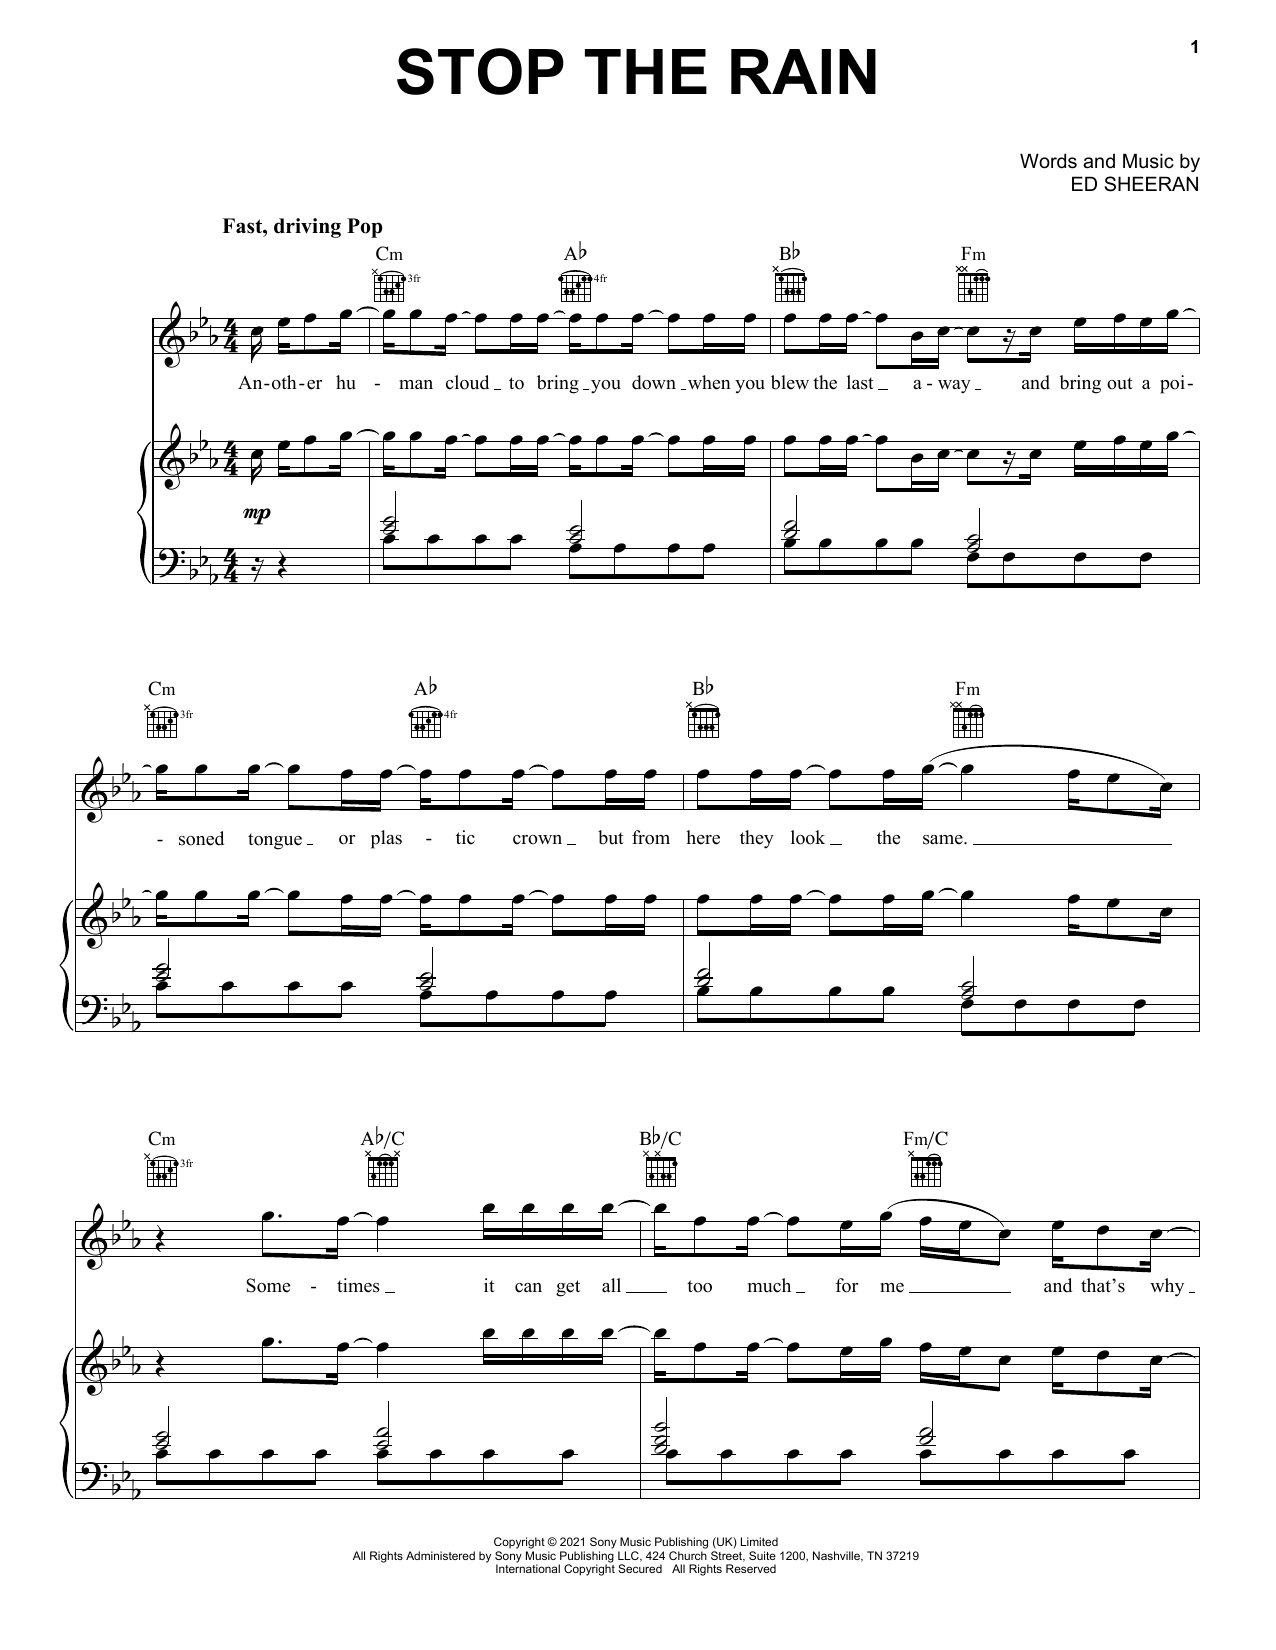 Ed Sheeran Stop The Rain Sheet Music Notes & Chords for Easy Piano - Download or Print PDF